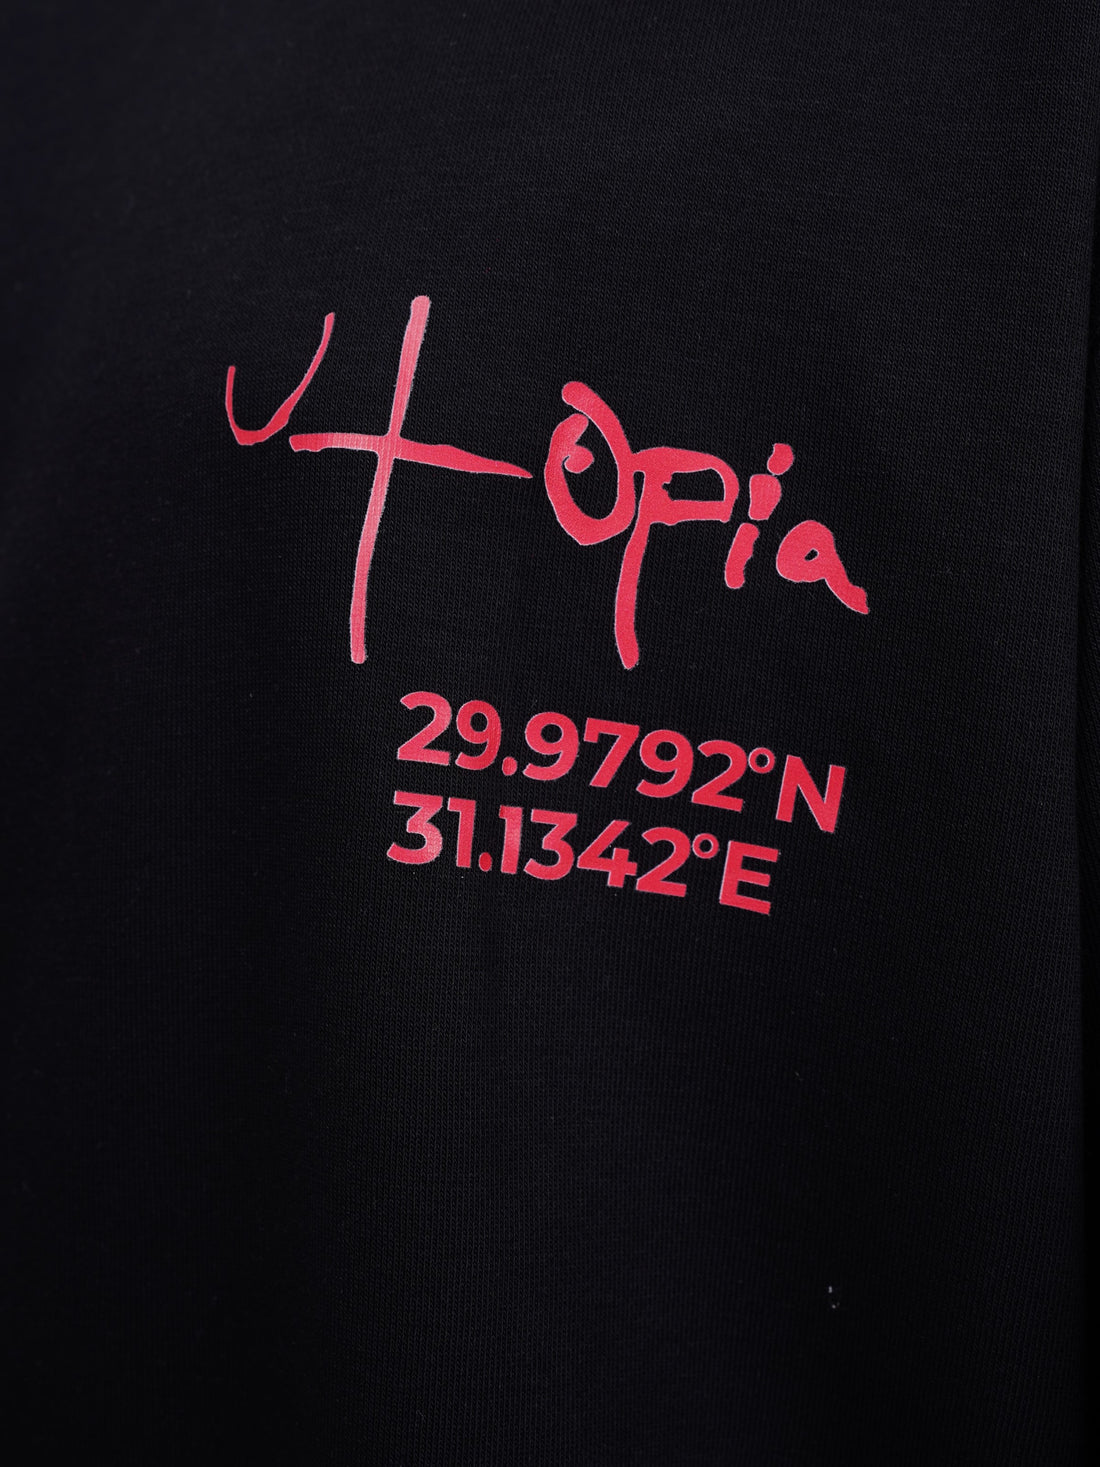 Travis Scott : Utopia In Egypt - Heavyweight Baggy Sweatshirts For Men And Women